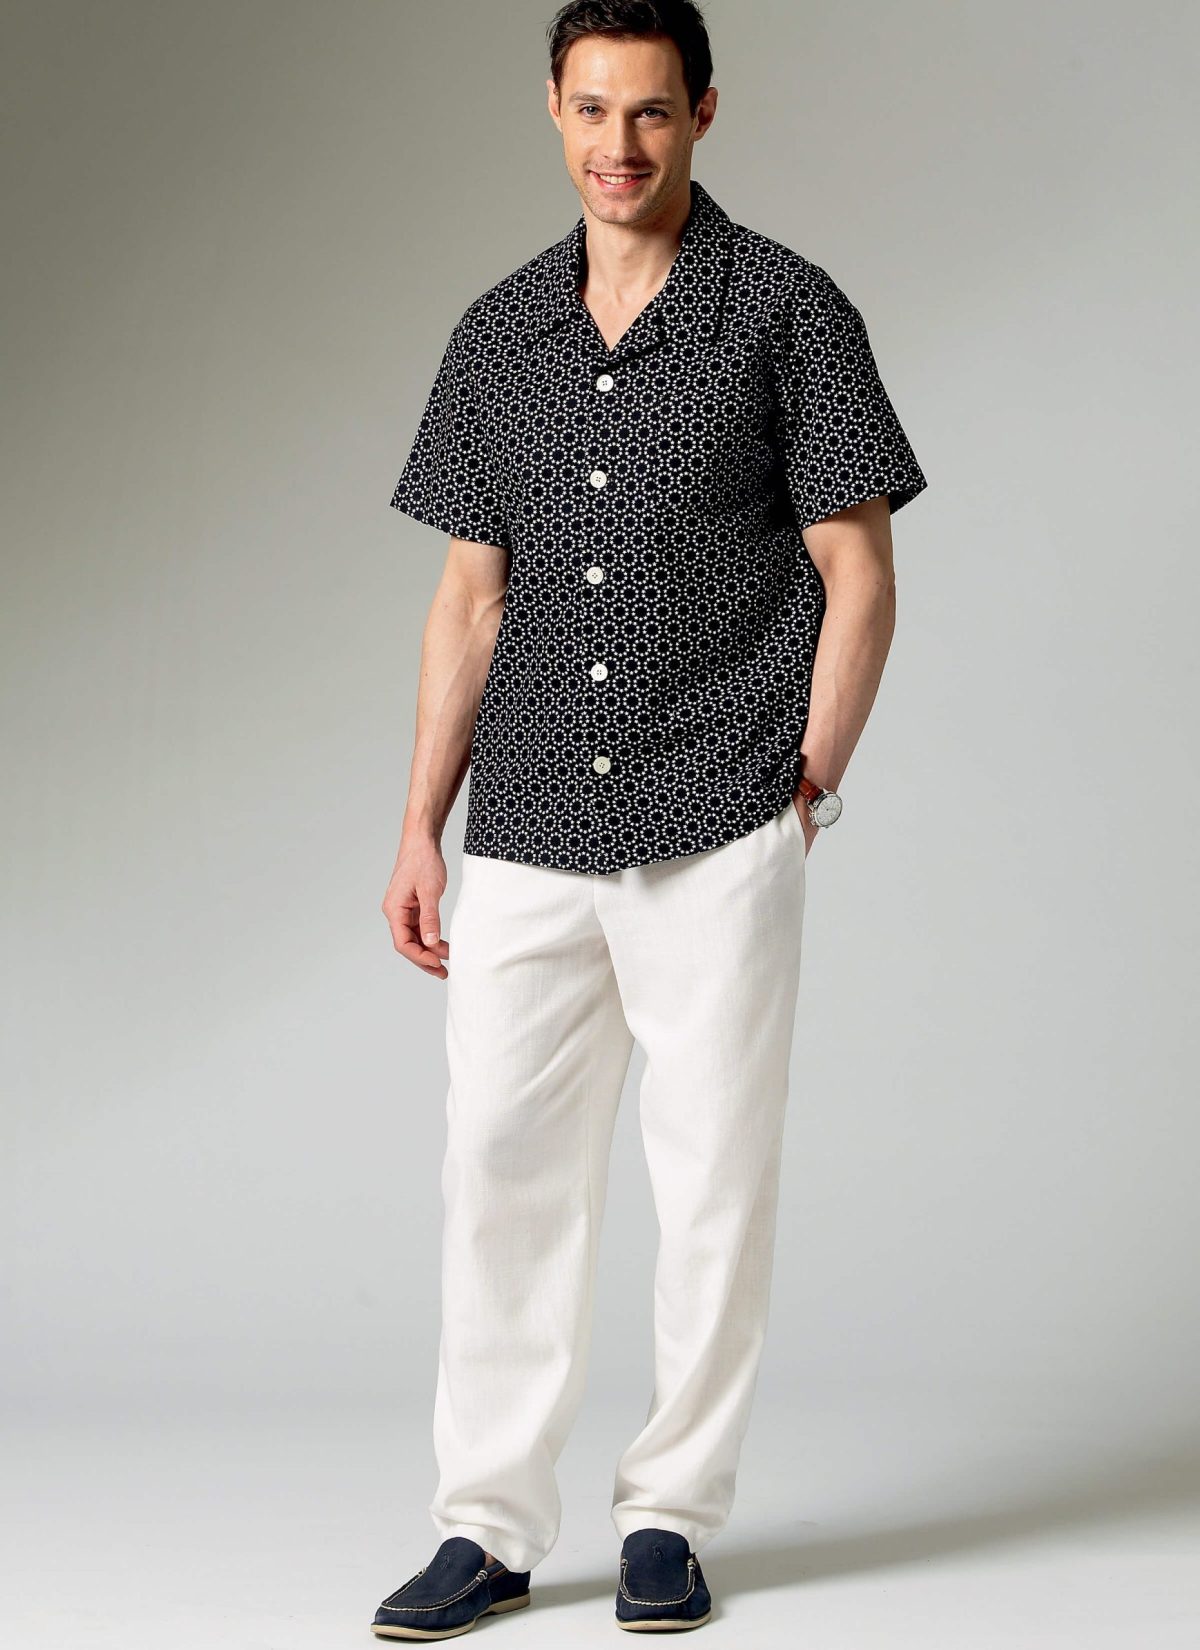 McCall's Sewing Pattern M6972 Men's/Boys' Shirt, Shorts and Pants